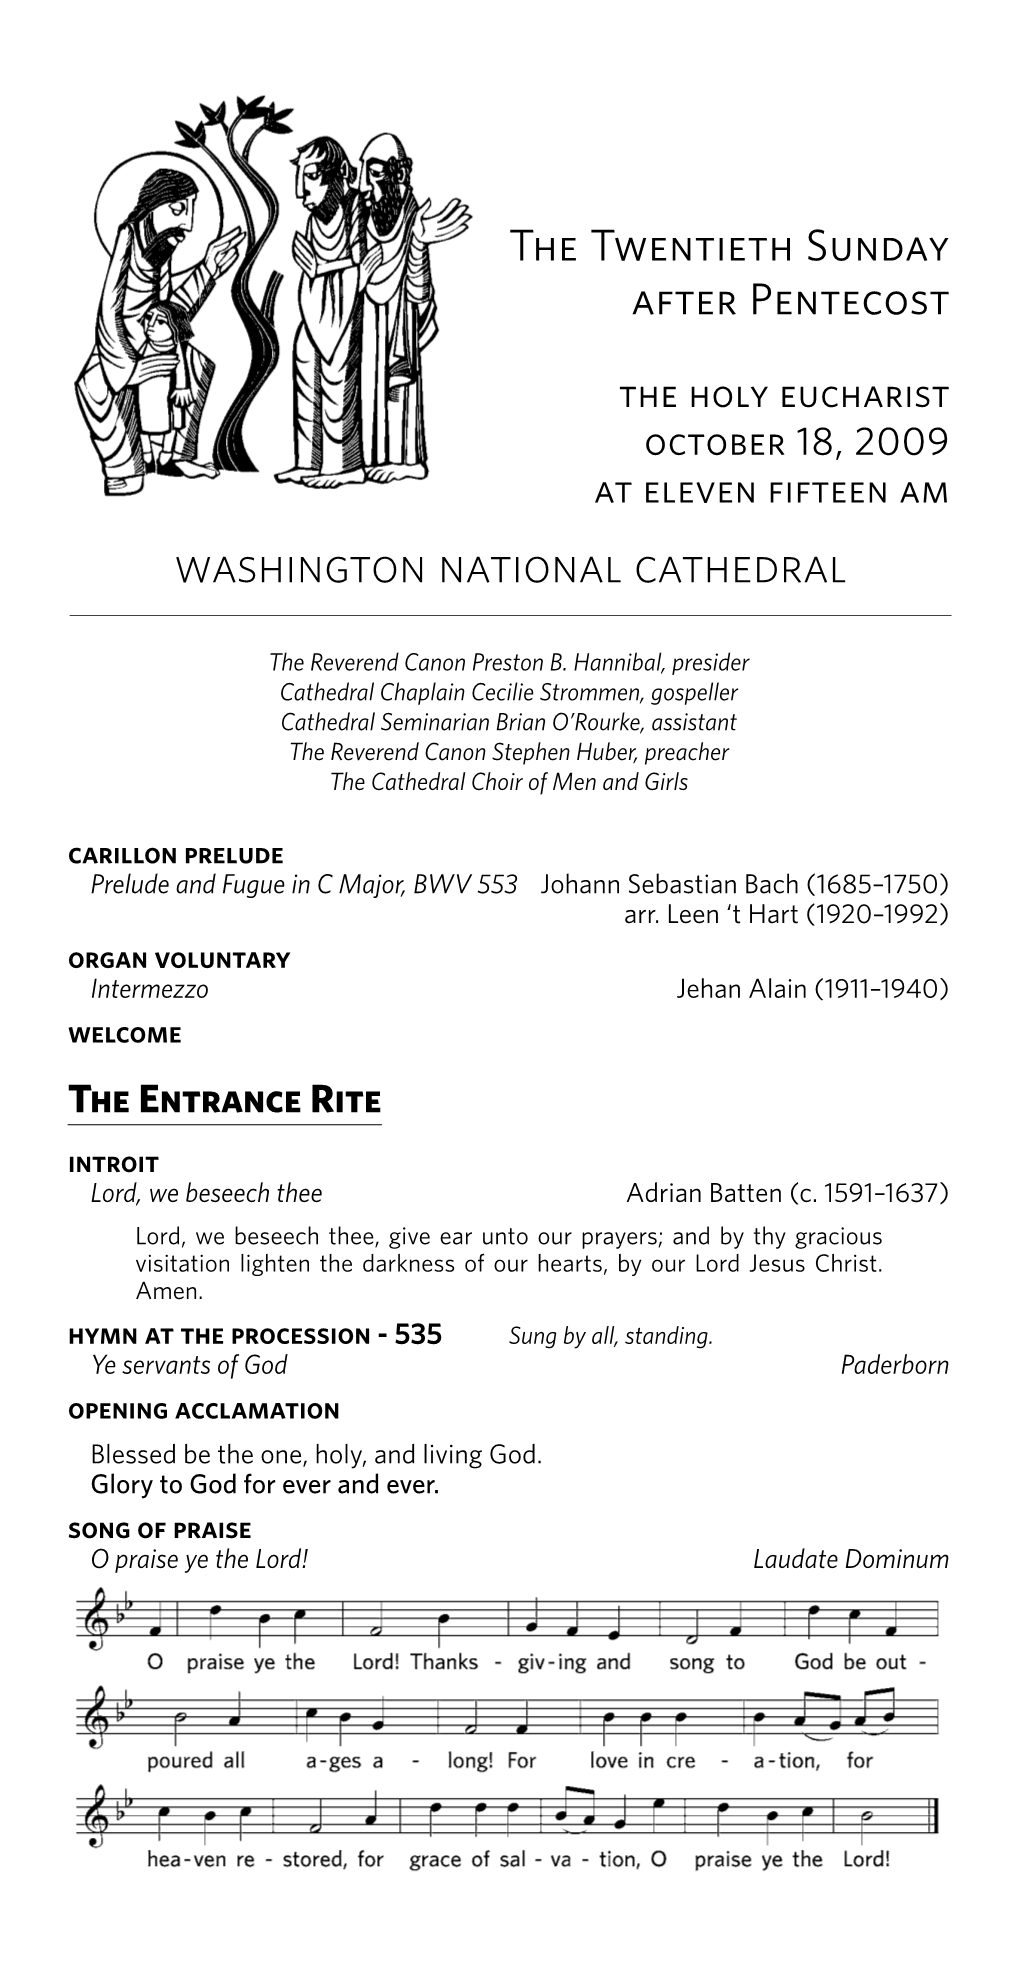 Leaflet (Bulletin) for Holy Eucharist, Sunday, October 18, 2009